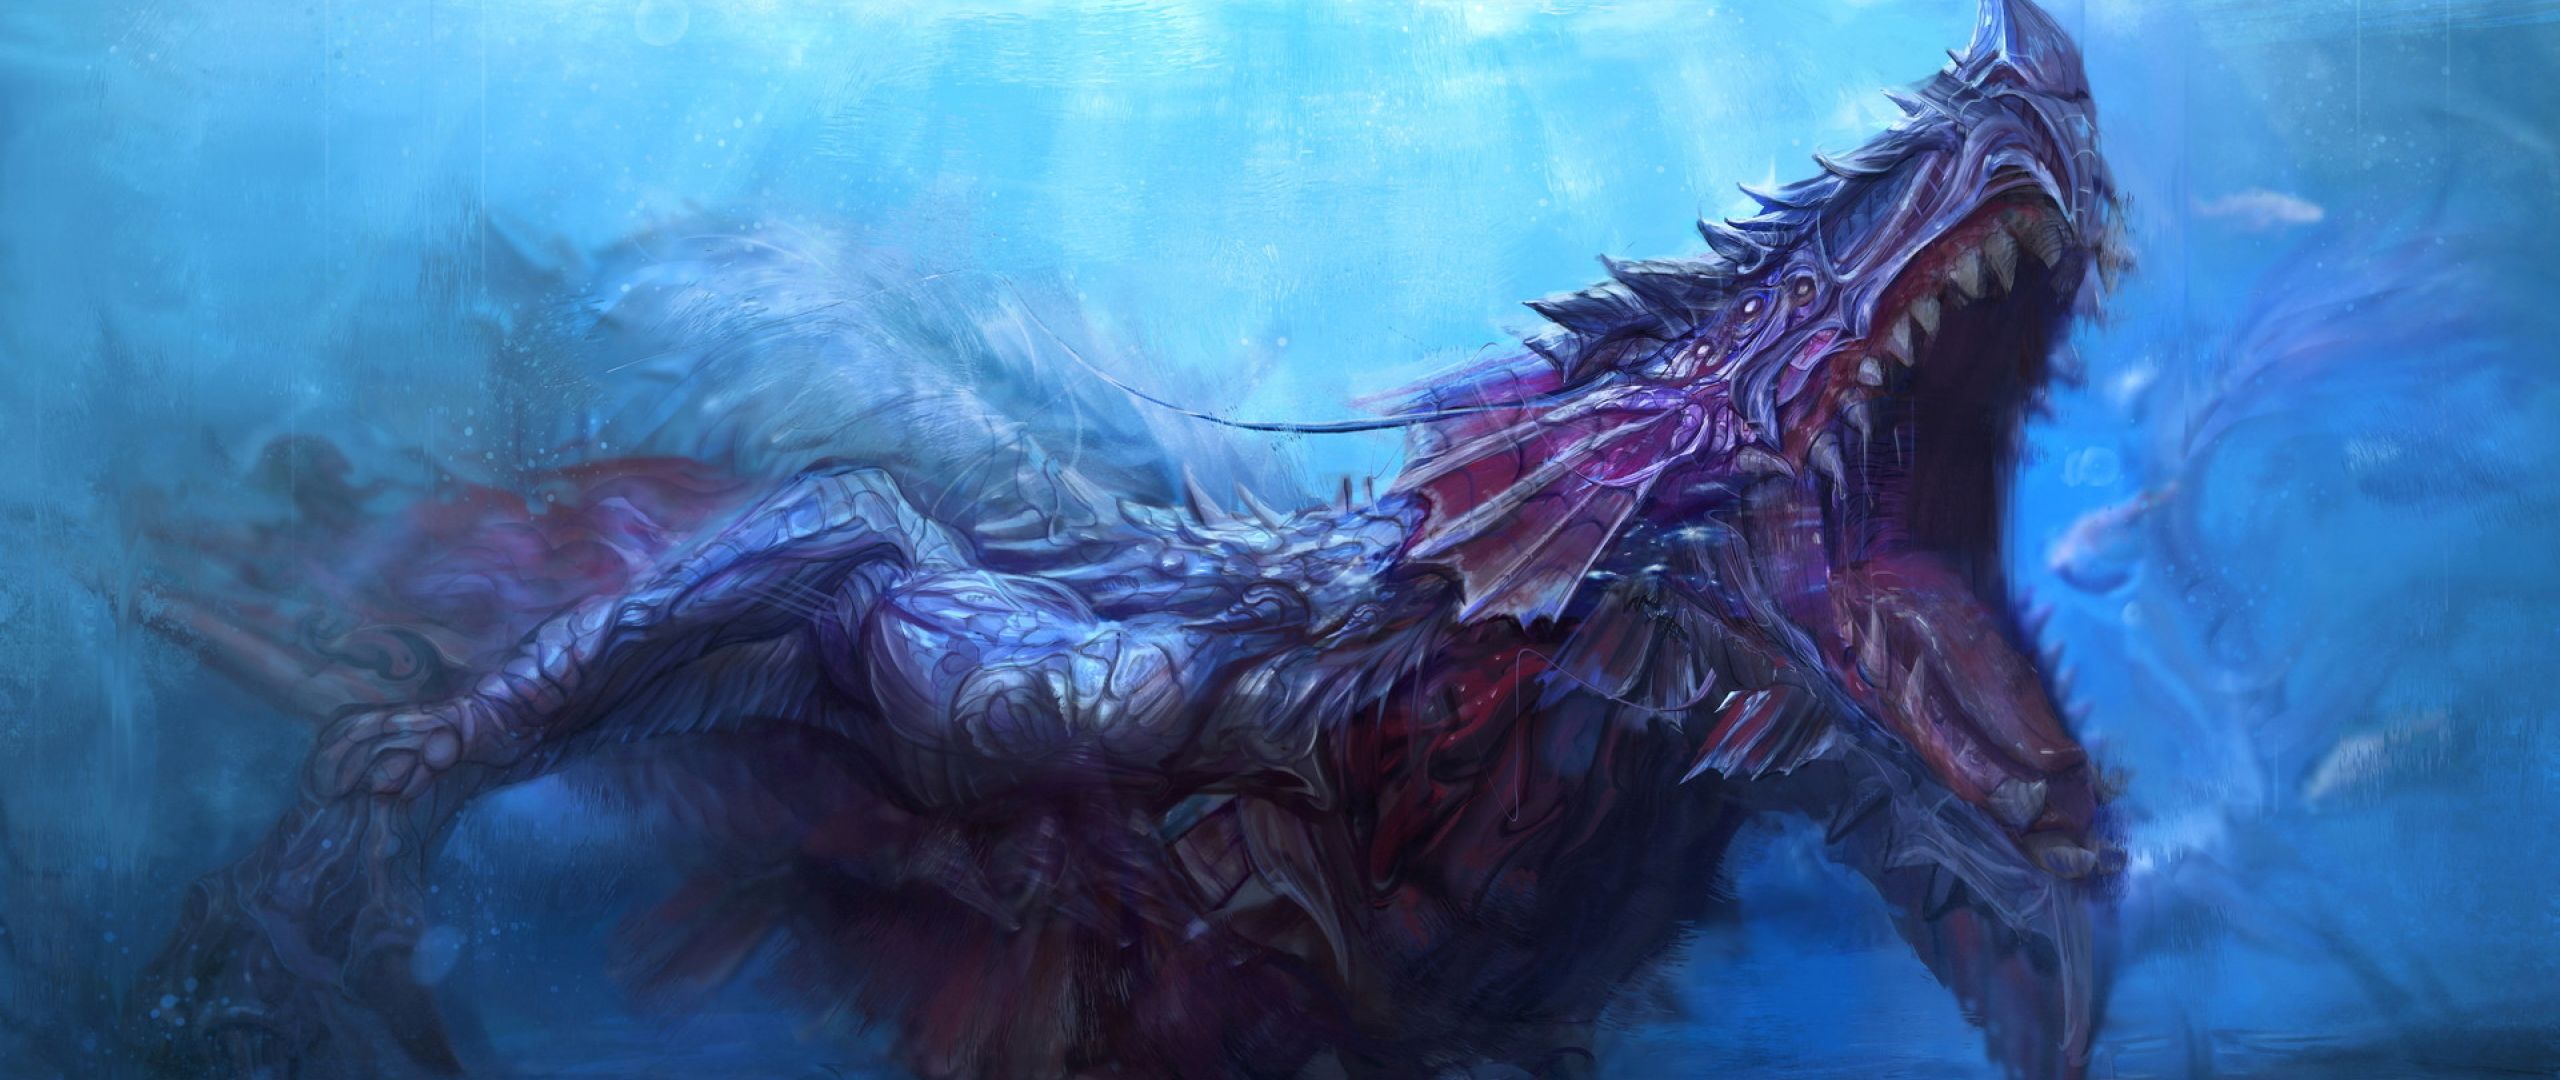 Sea Monster Underwater Creature 2560x1080 Resolution Wallpaper, HD Artist 4K Wallpaper, Image, Photo and Background